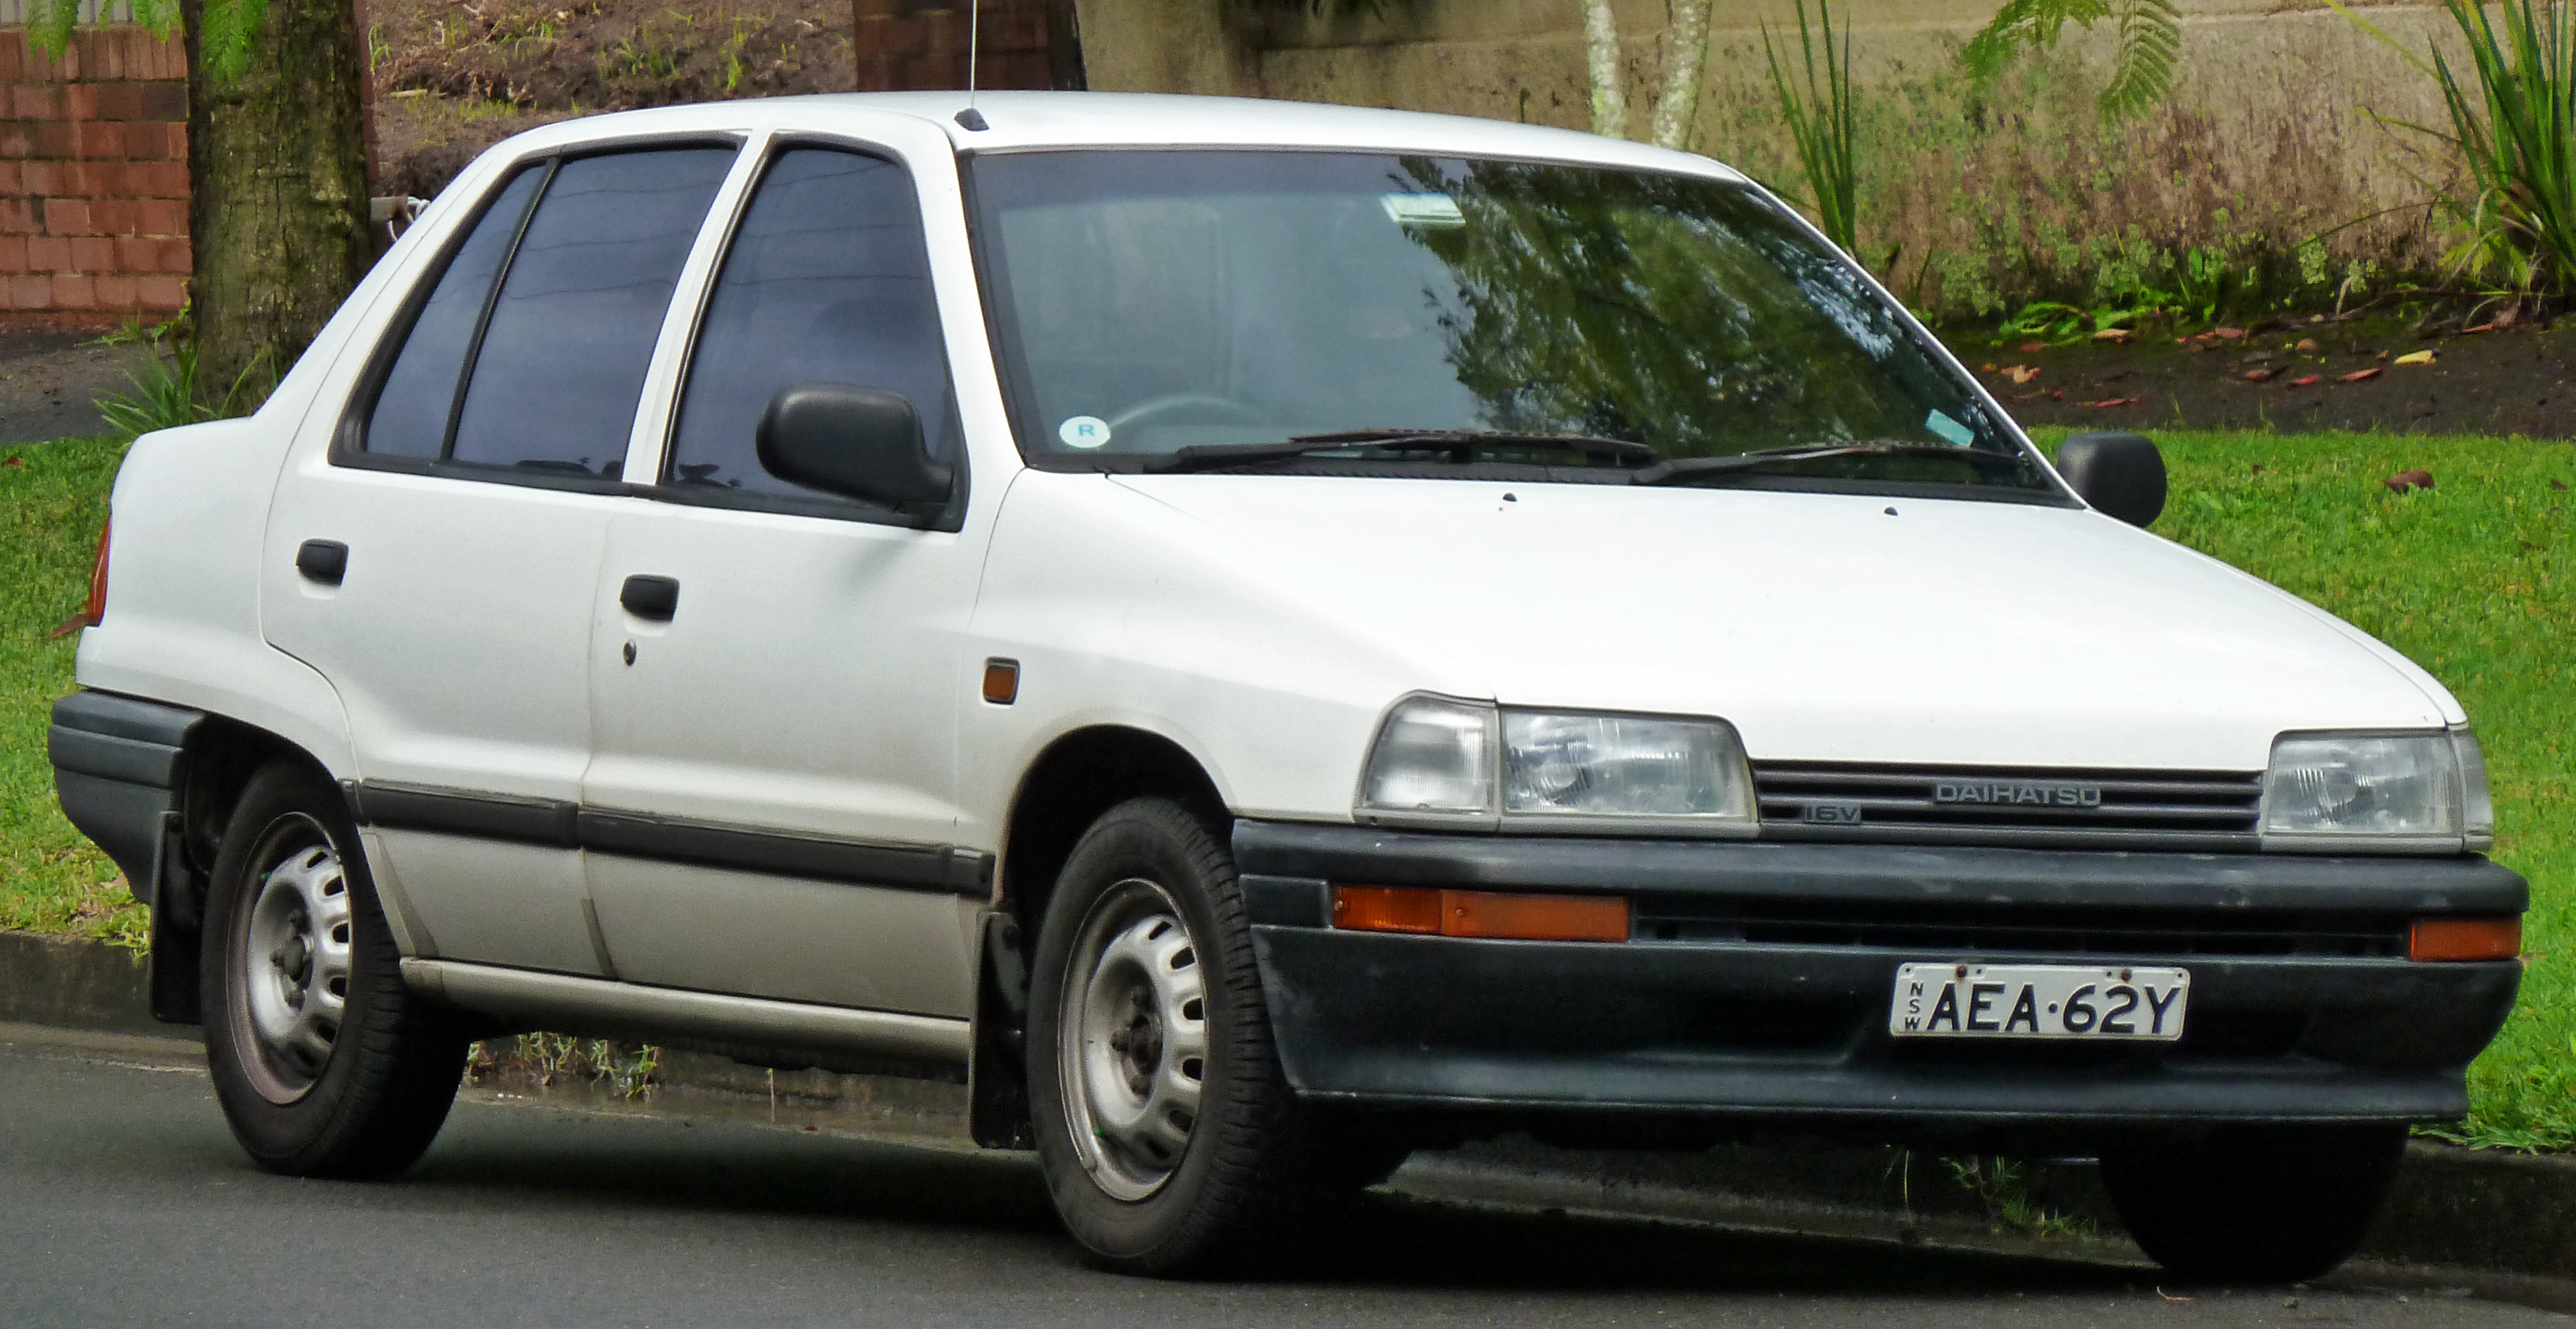 Daihatsu Charade 15i Sedan